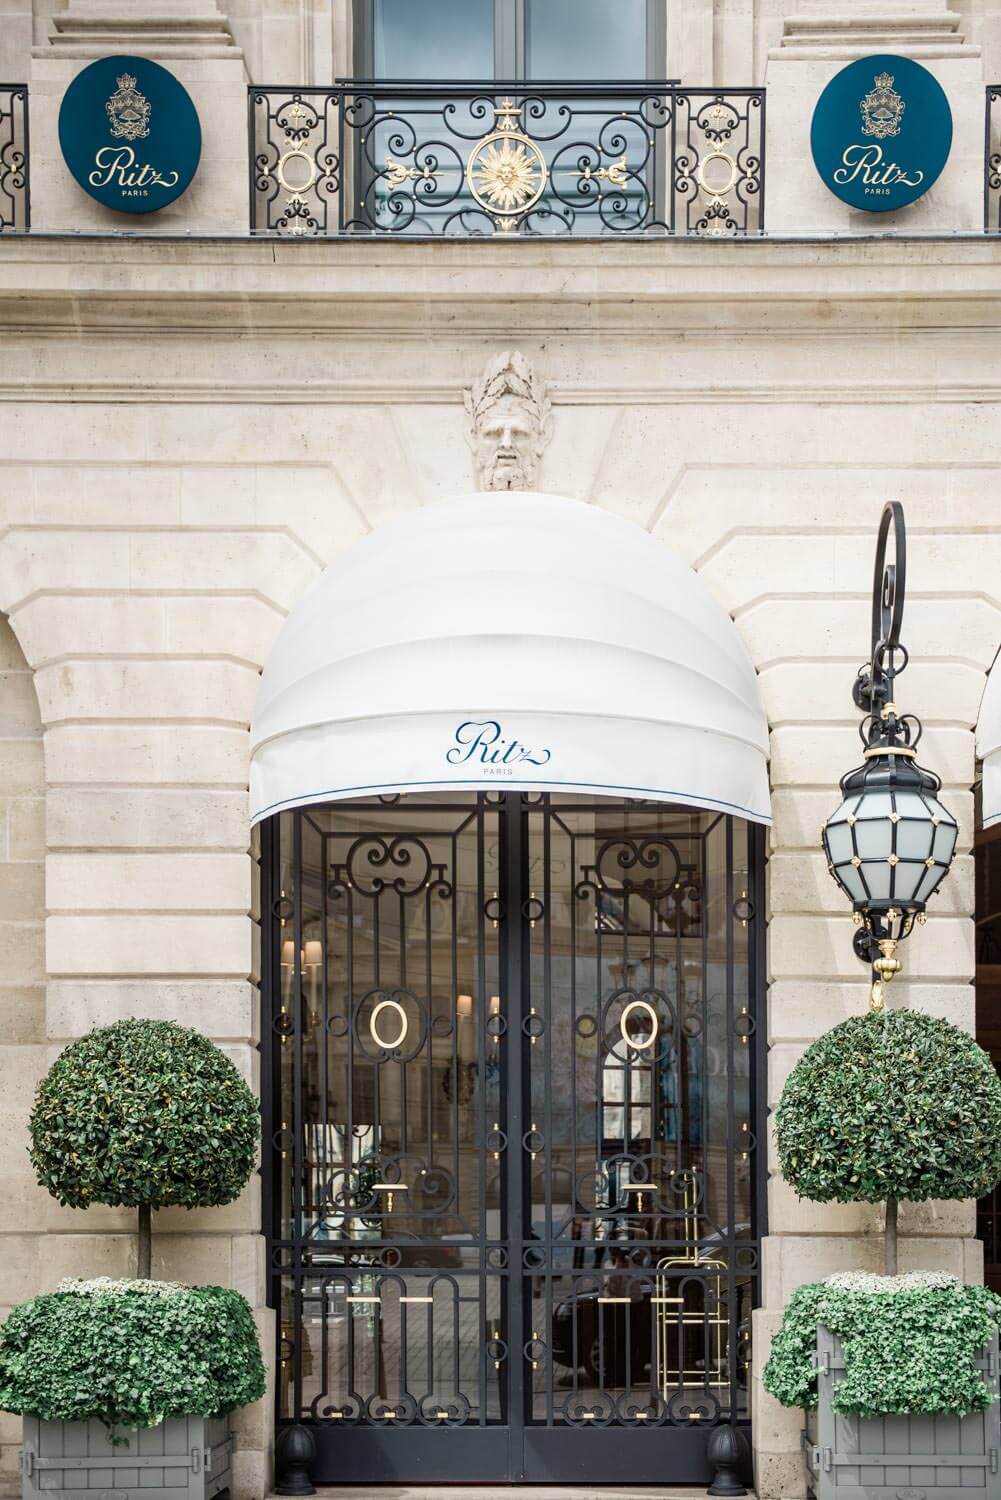 The Ritz Paris was the venue where this elopement wedding took place